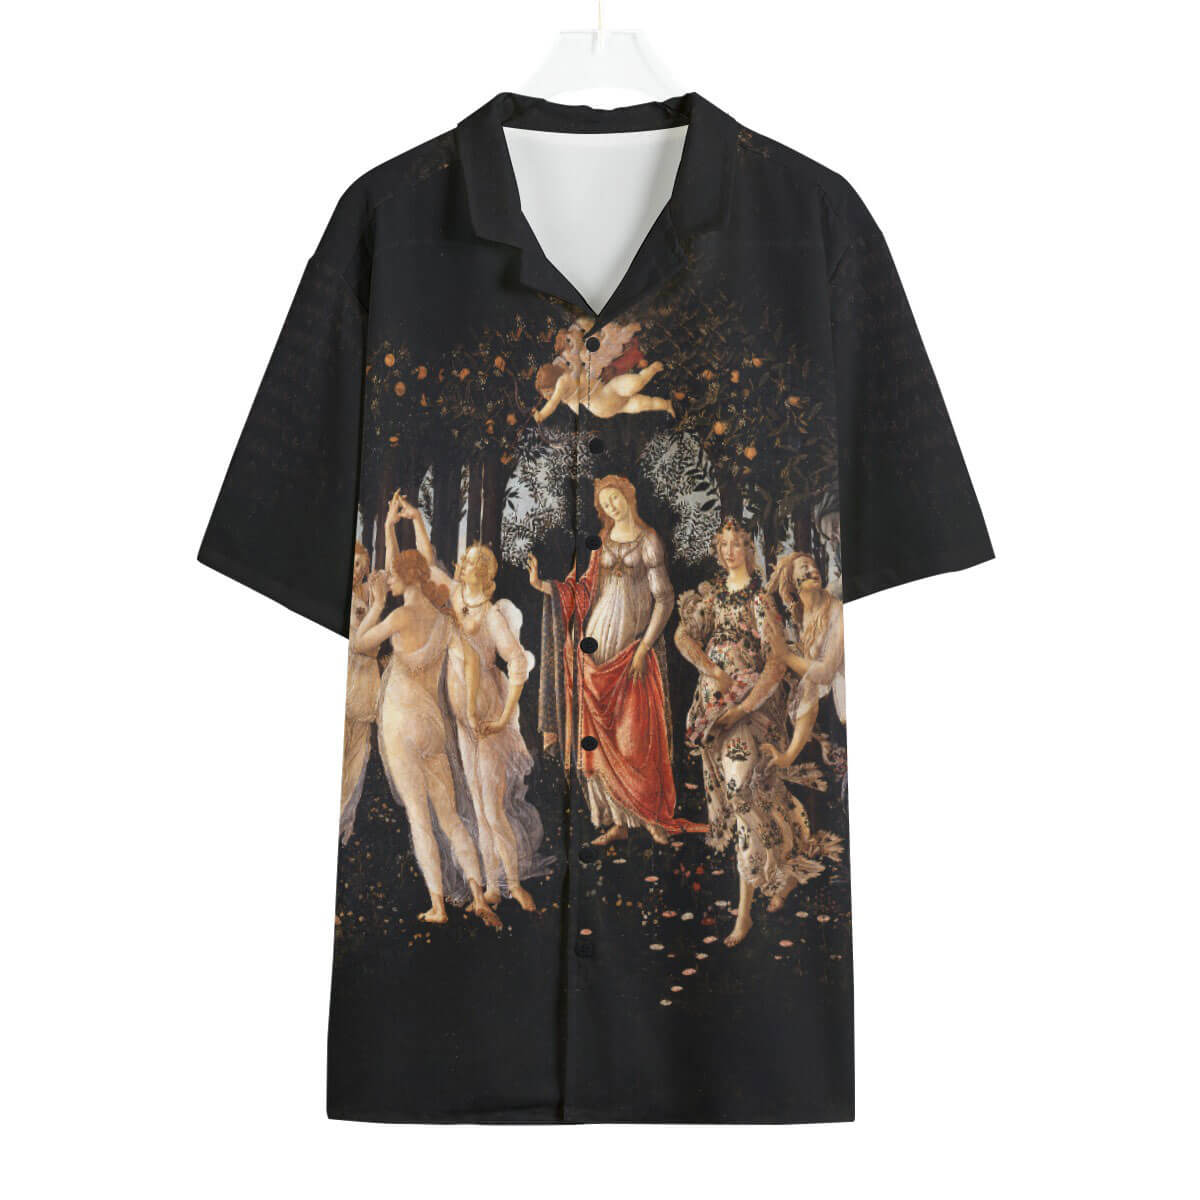 La Primavera Botticelli Hawaiian shirt worn by model